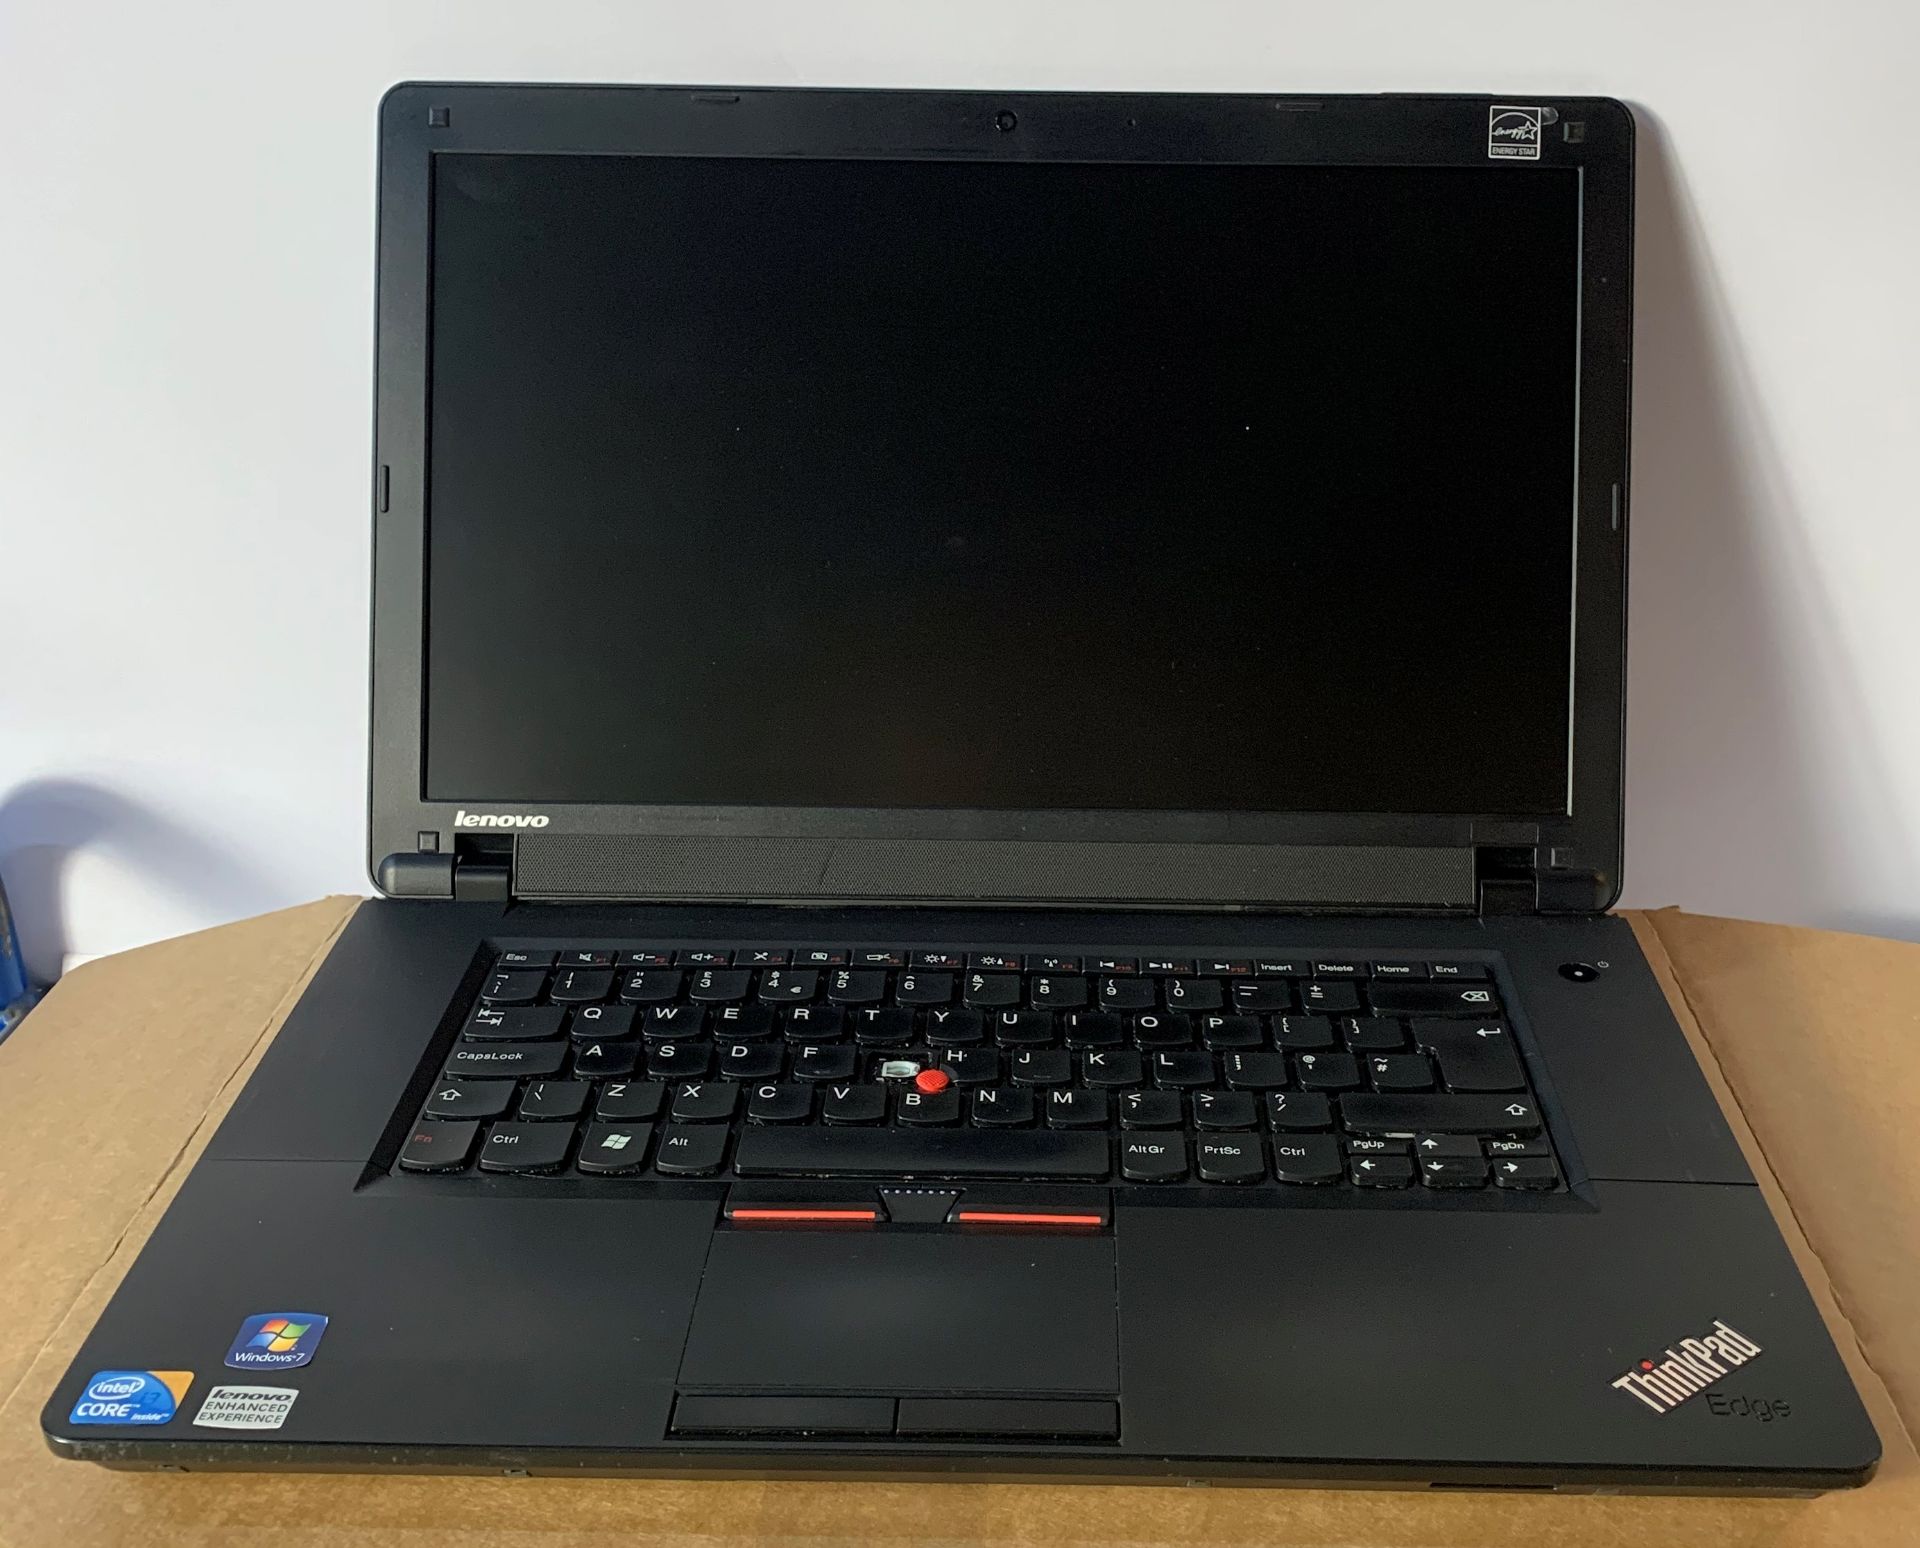 Lenovo Thinkpad Edge Laptop | Intel Core i3 M 380 2.53GHz - Image 3 of 4